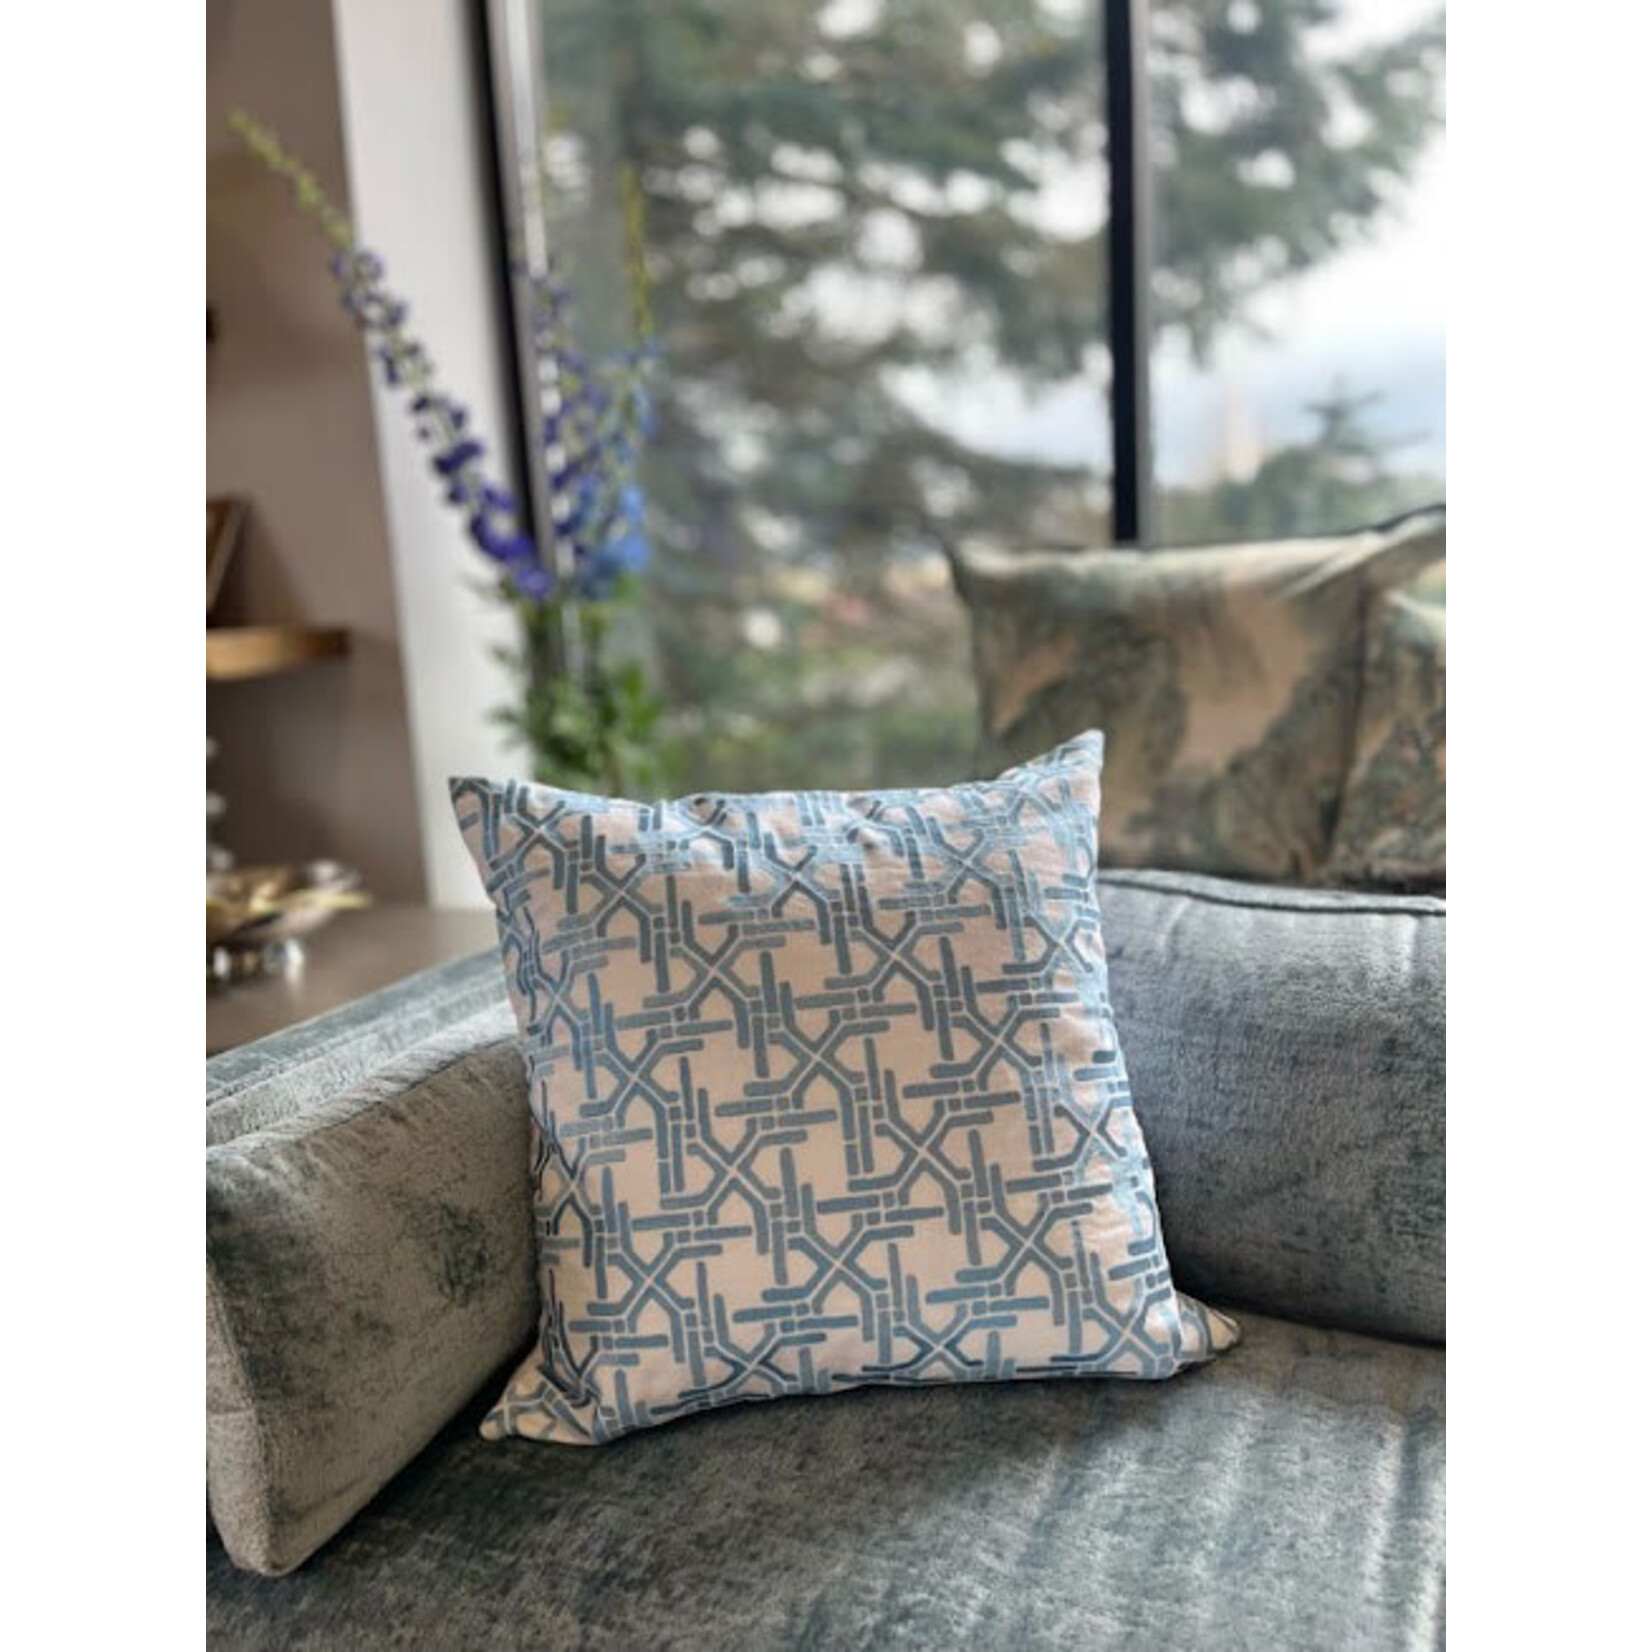 John Robshaw Textiles Girik Decorative Pillow with Insert 22x22